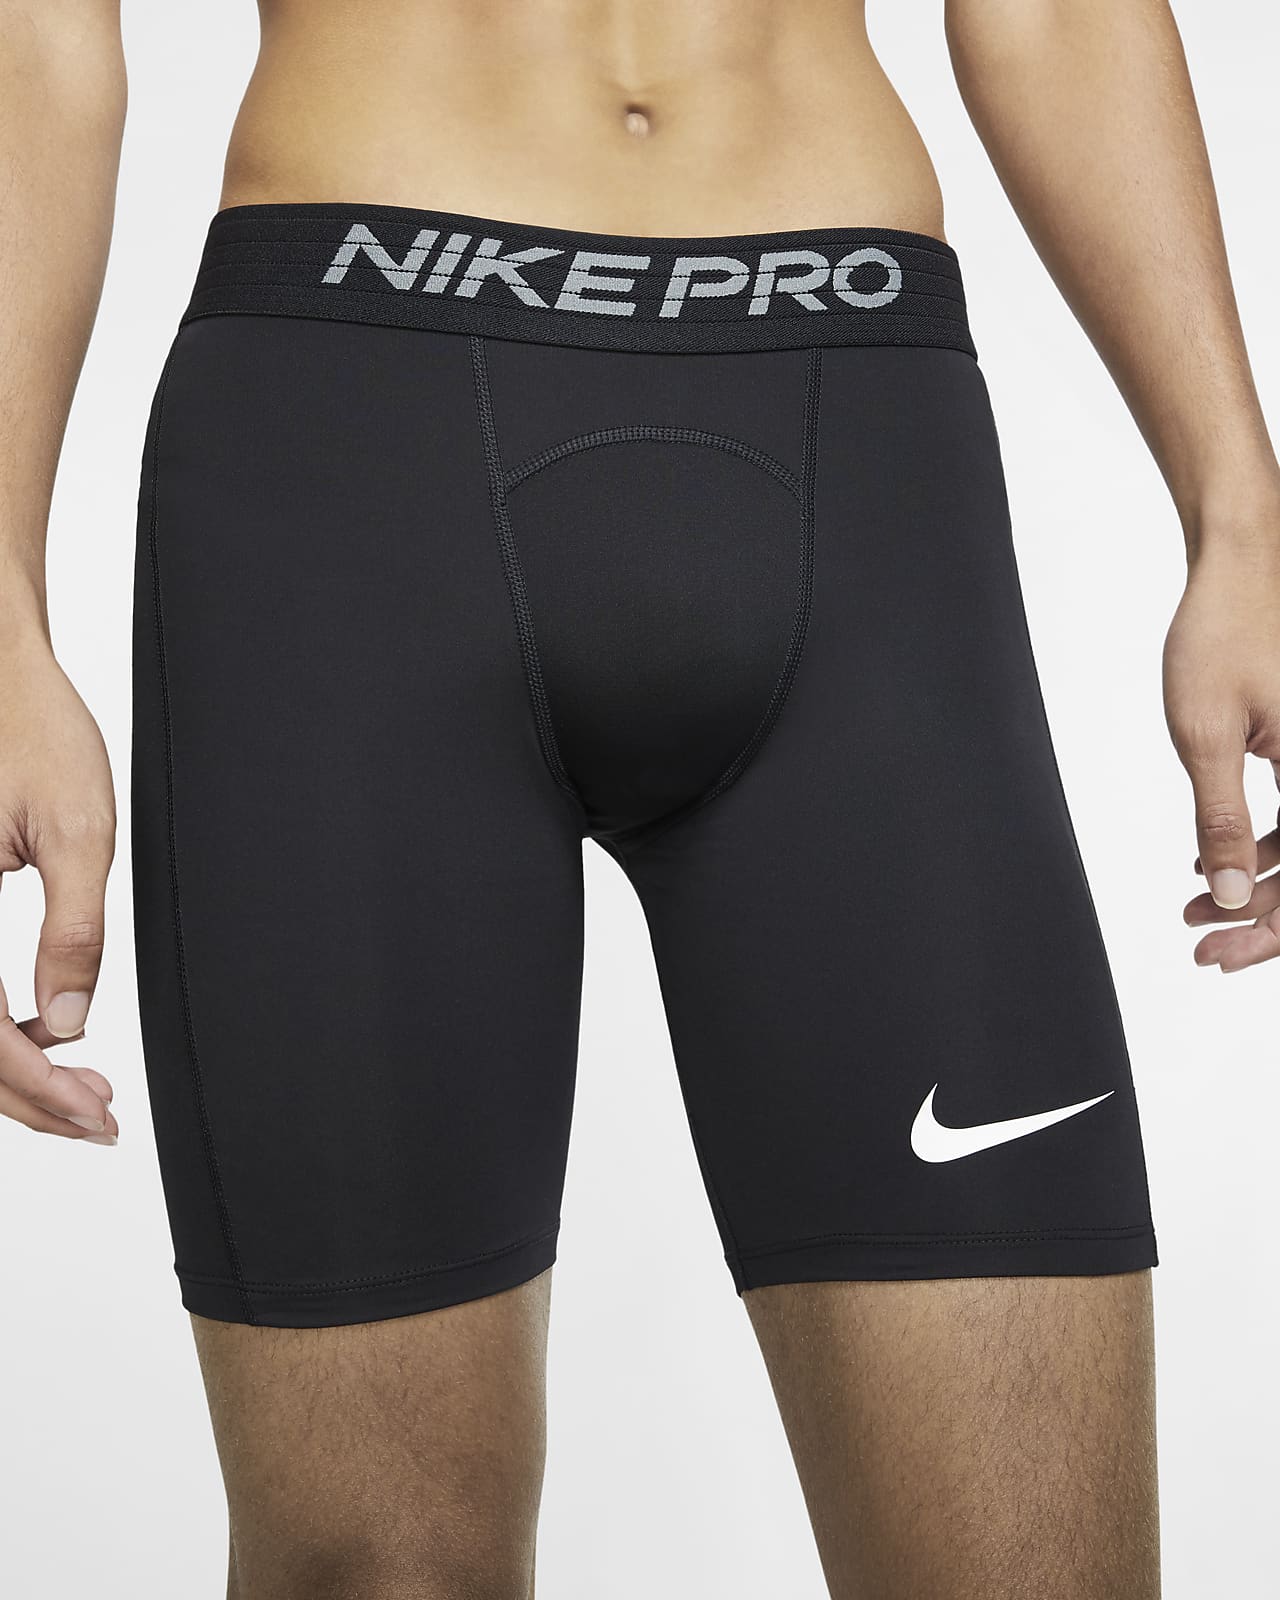 nike pro shorts very